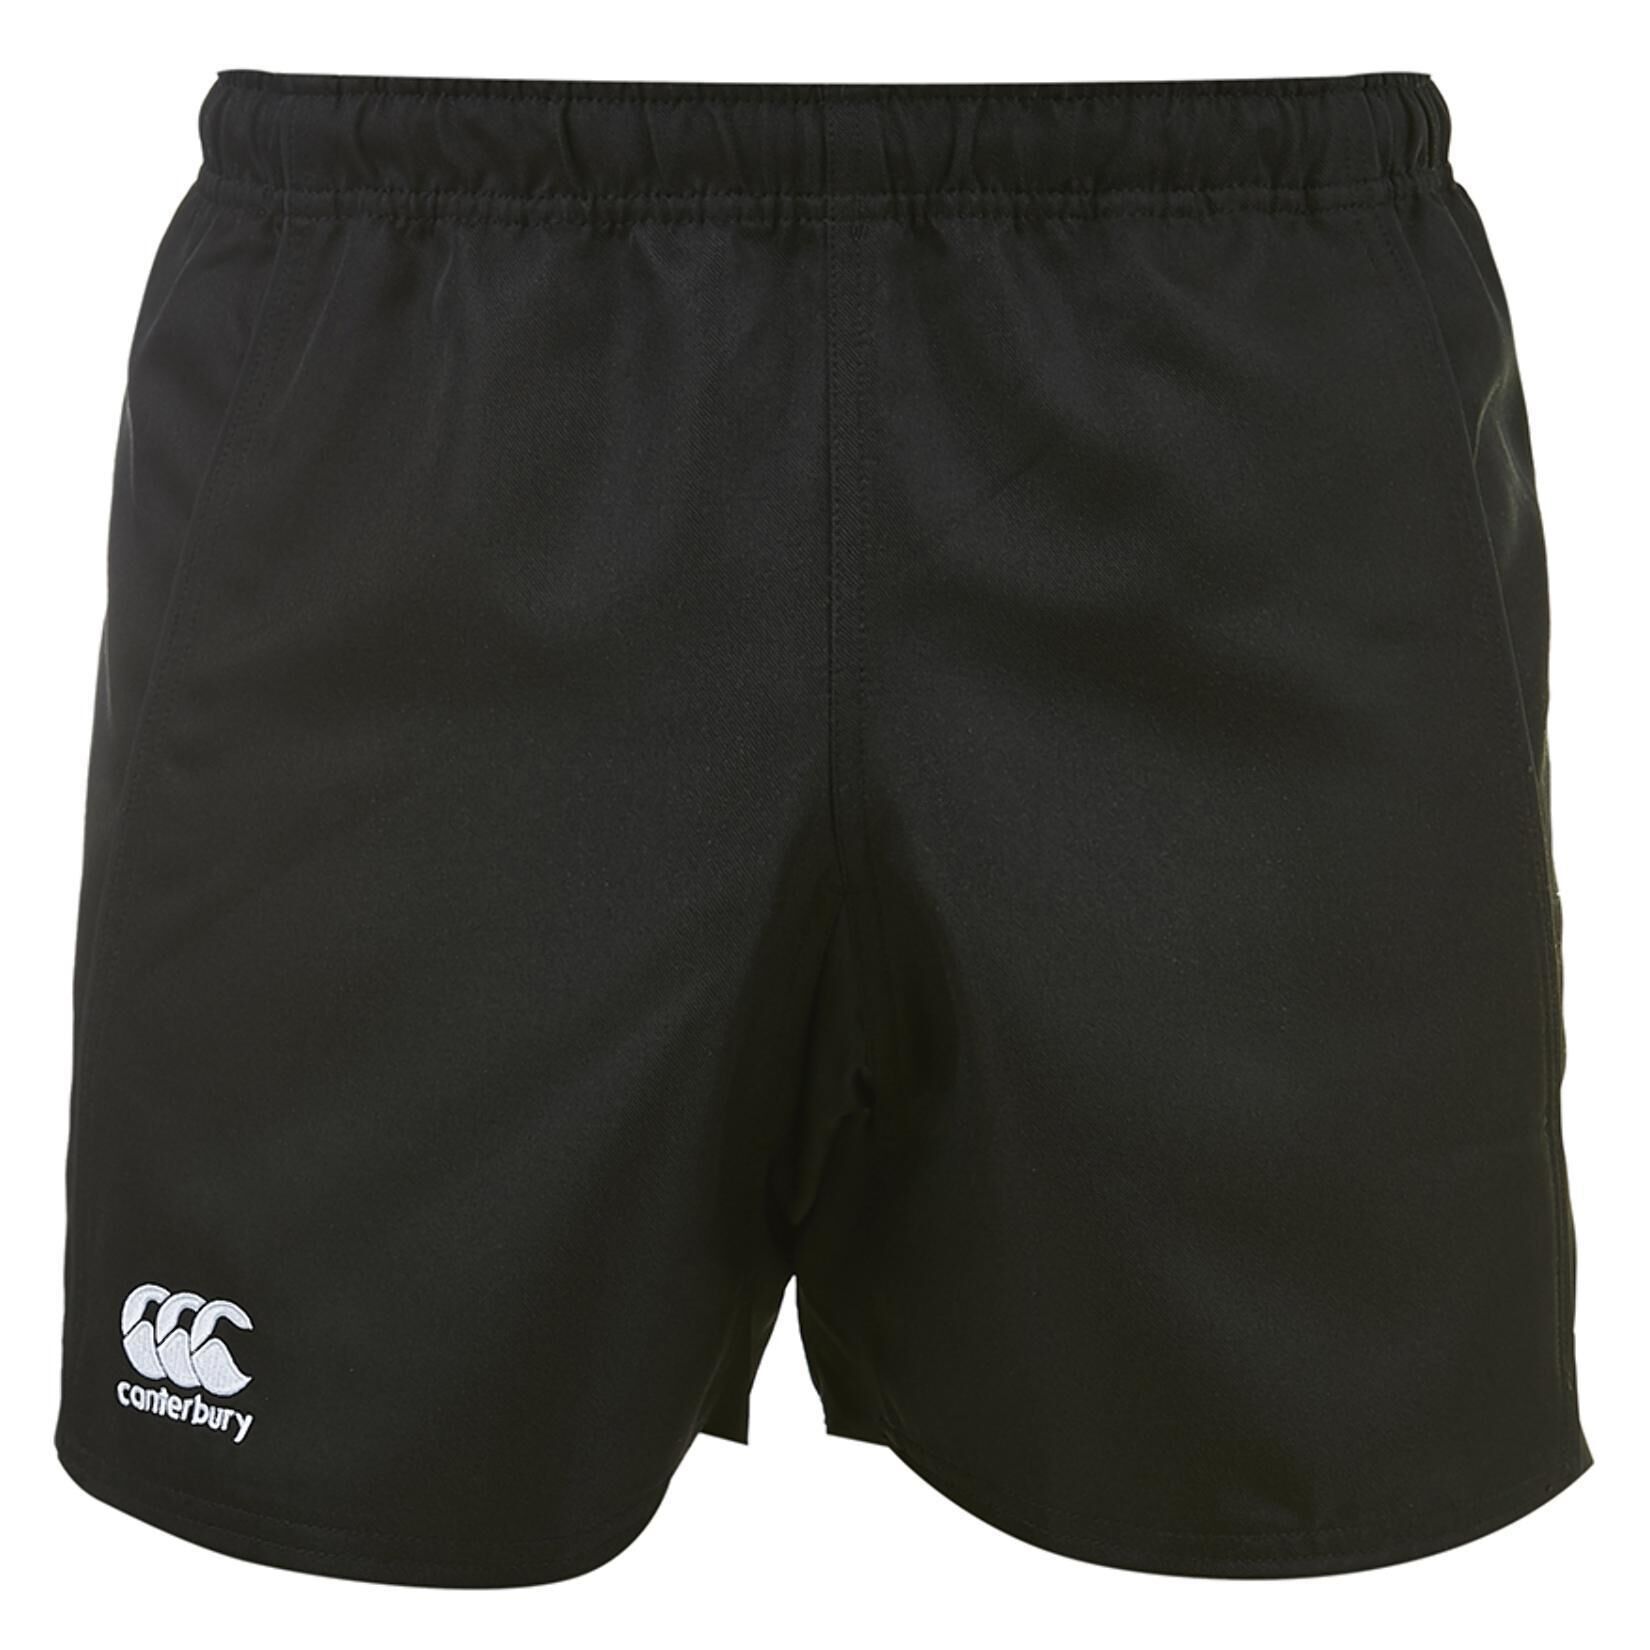 CANTERBURY Mens Advantage Rugby Shorts (Black)